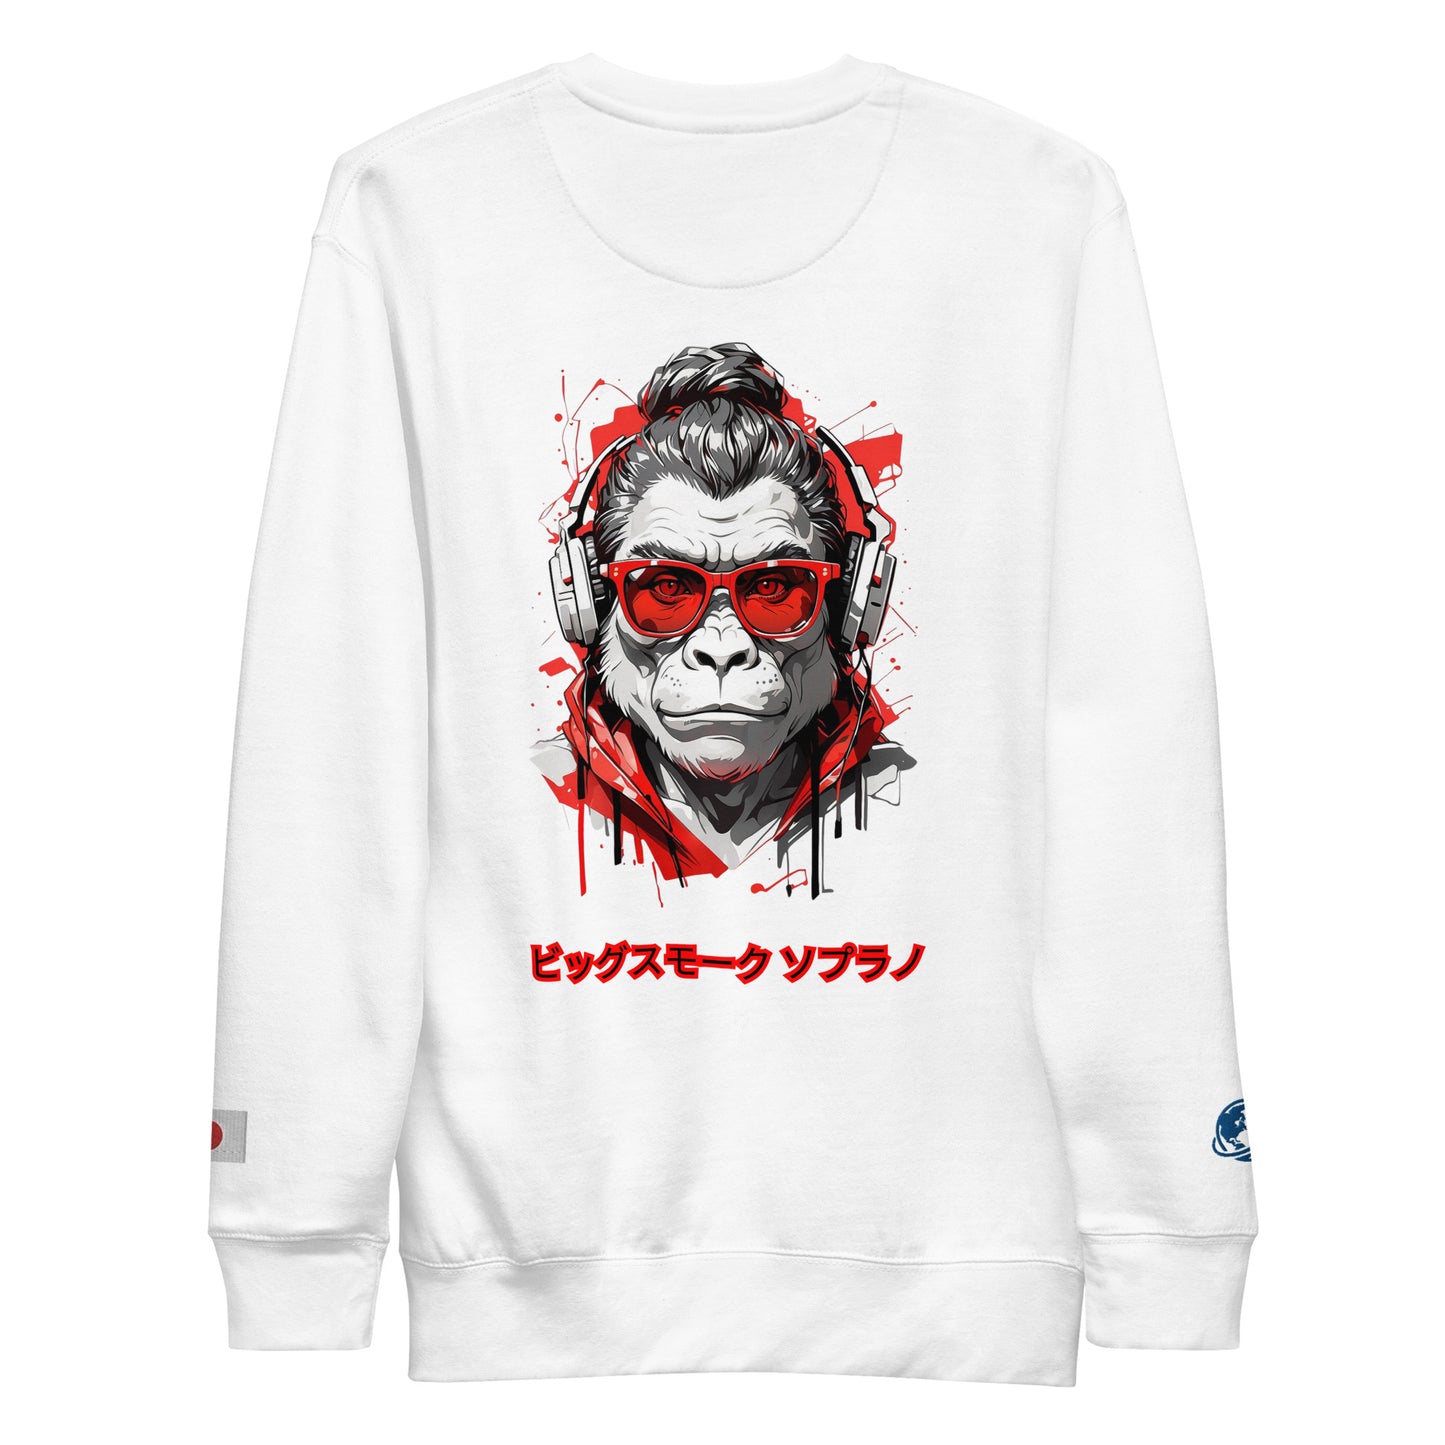 BigSmoke Soprano Clothing: BigSmoke Soprano Worldwide Collection: Paid the Cost Sweatshirt (Japan Edition)